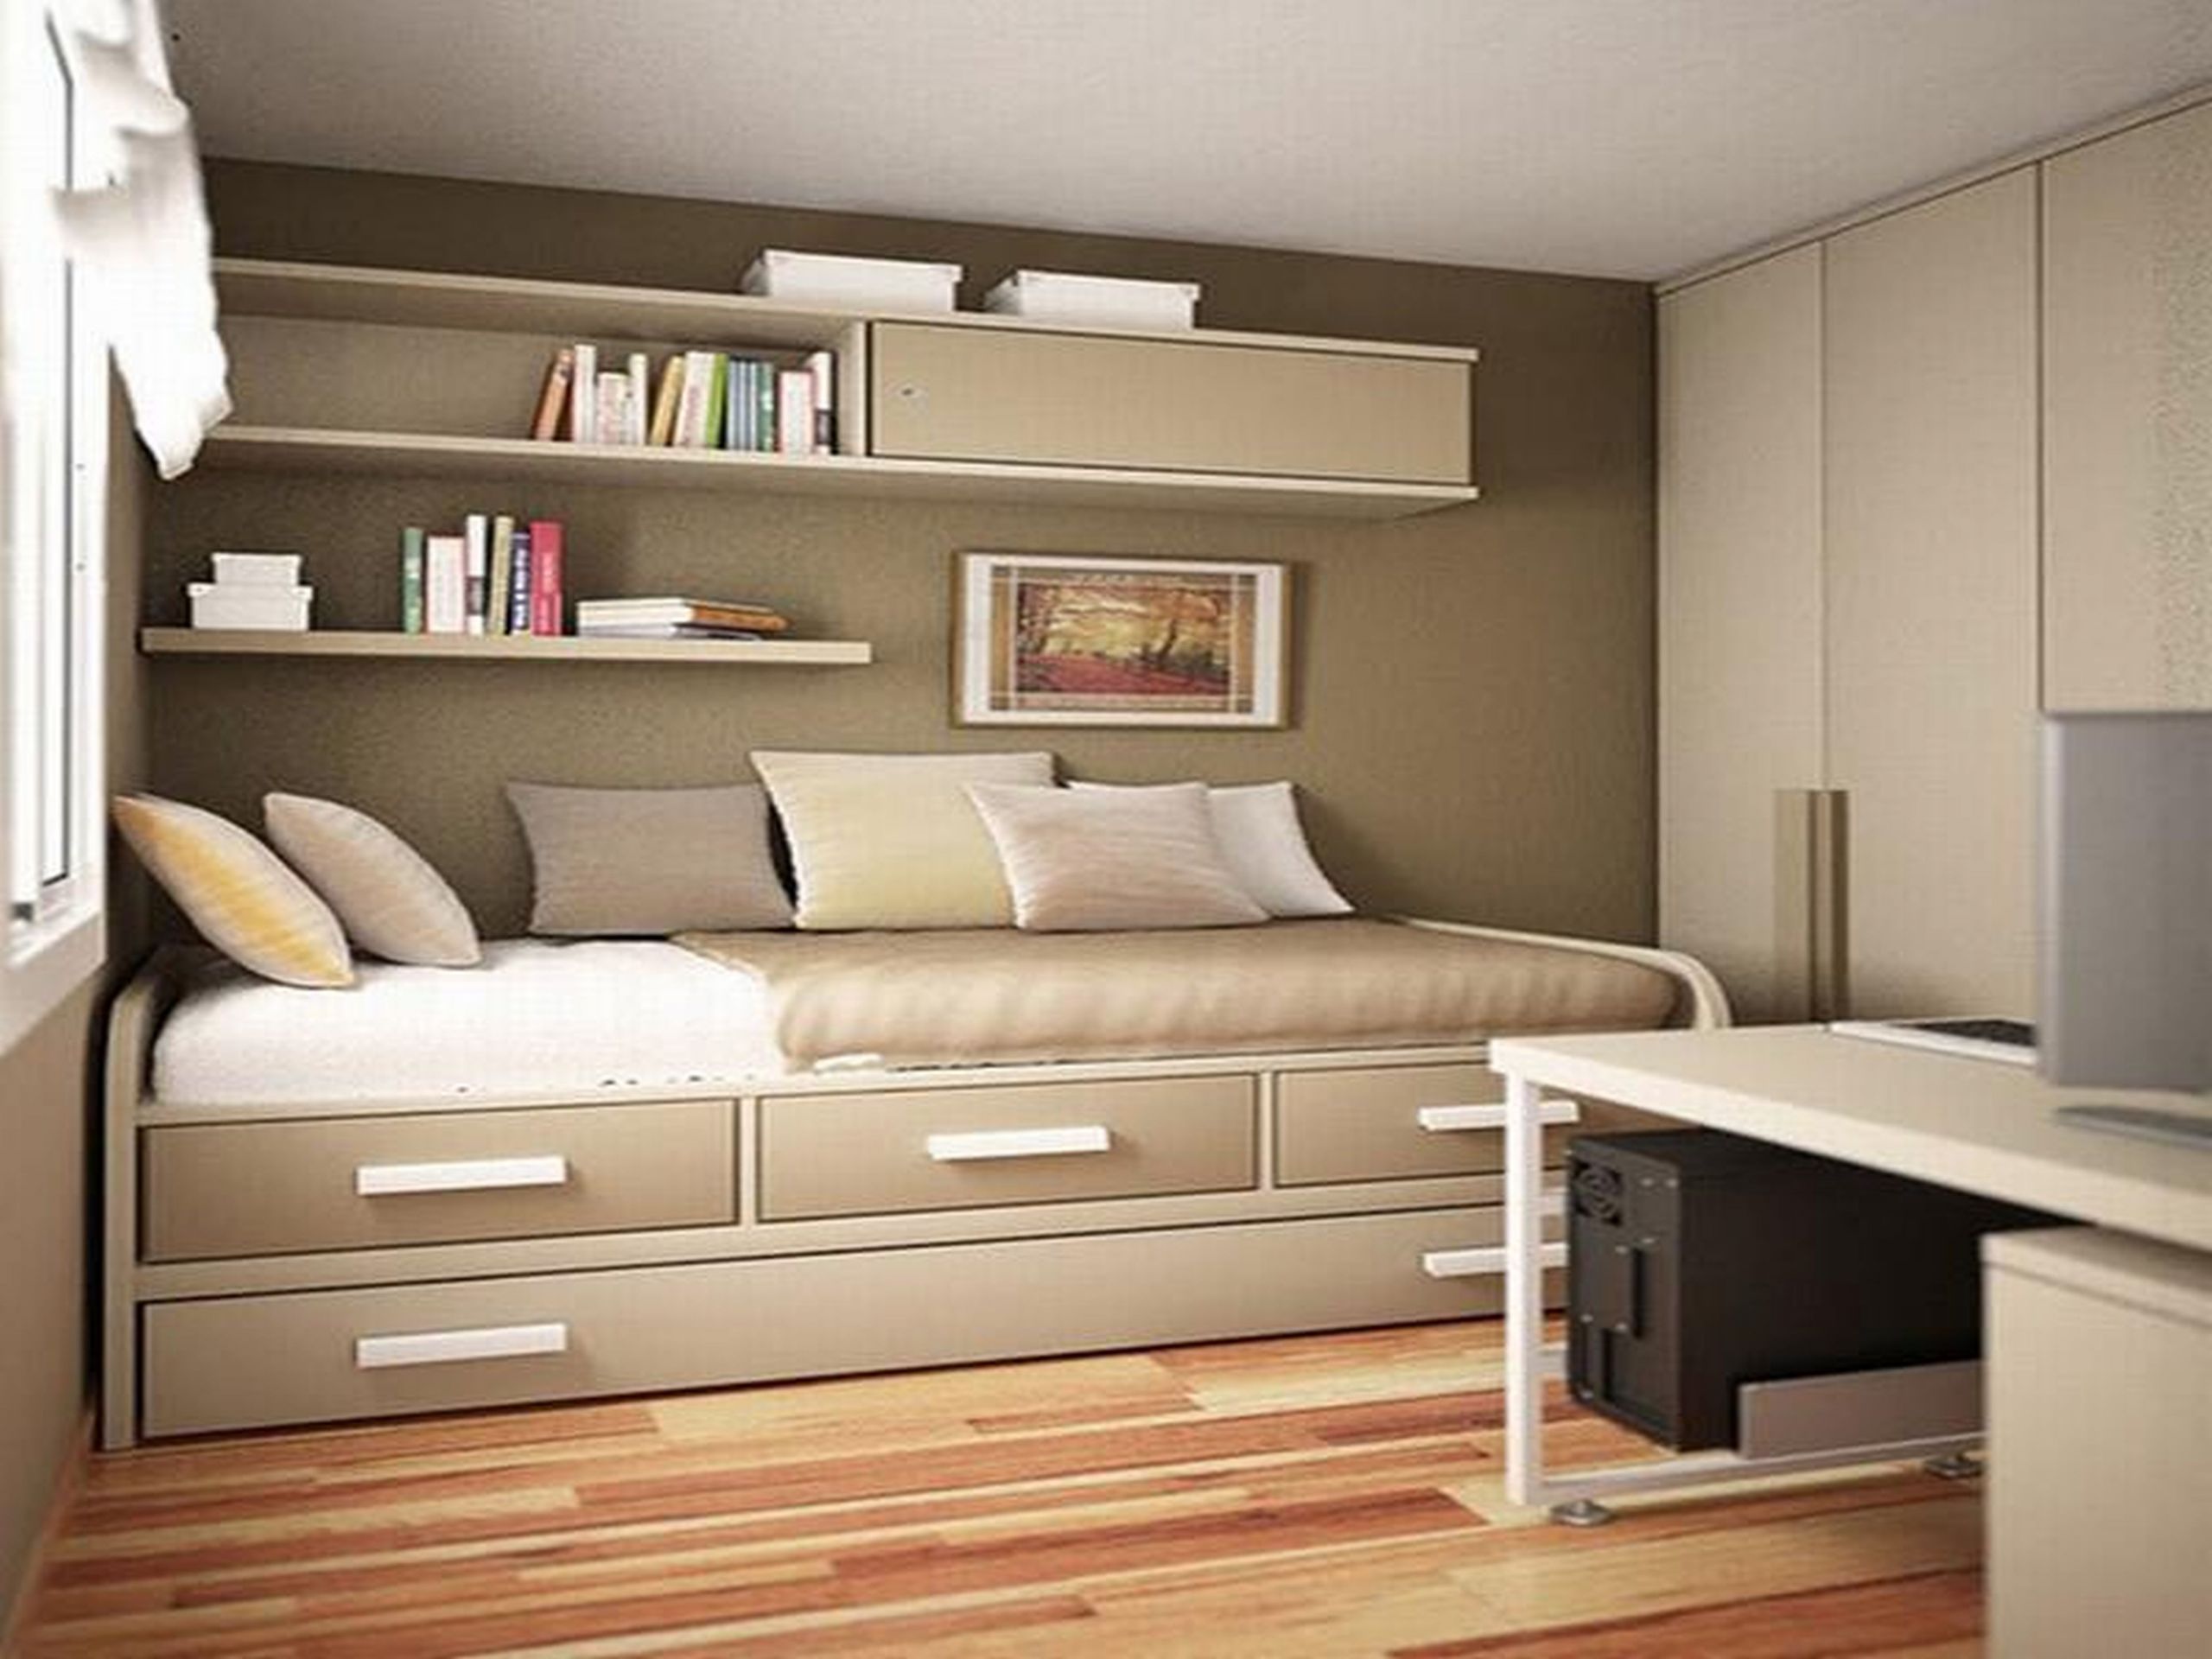 Cheap Bedroom Storage
 Ikea storage cabinets bedroom ikea bedroom storage on